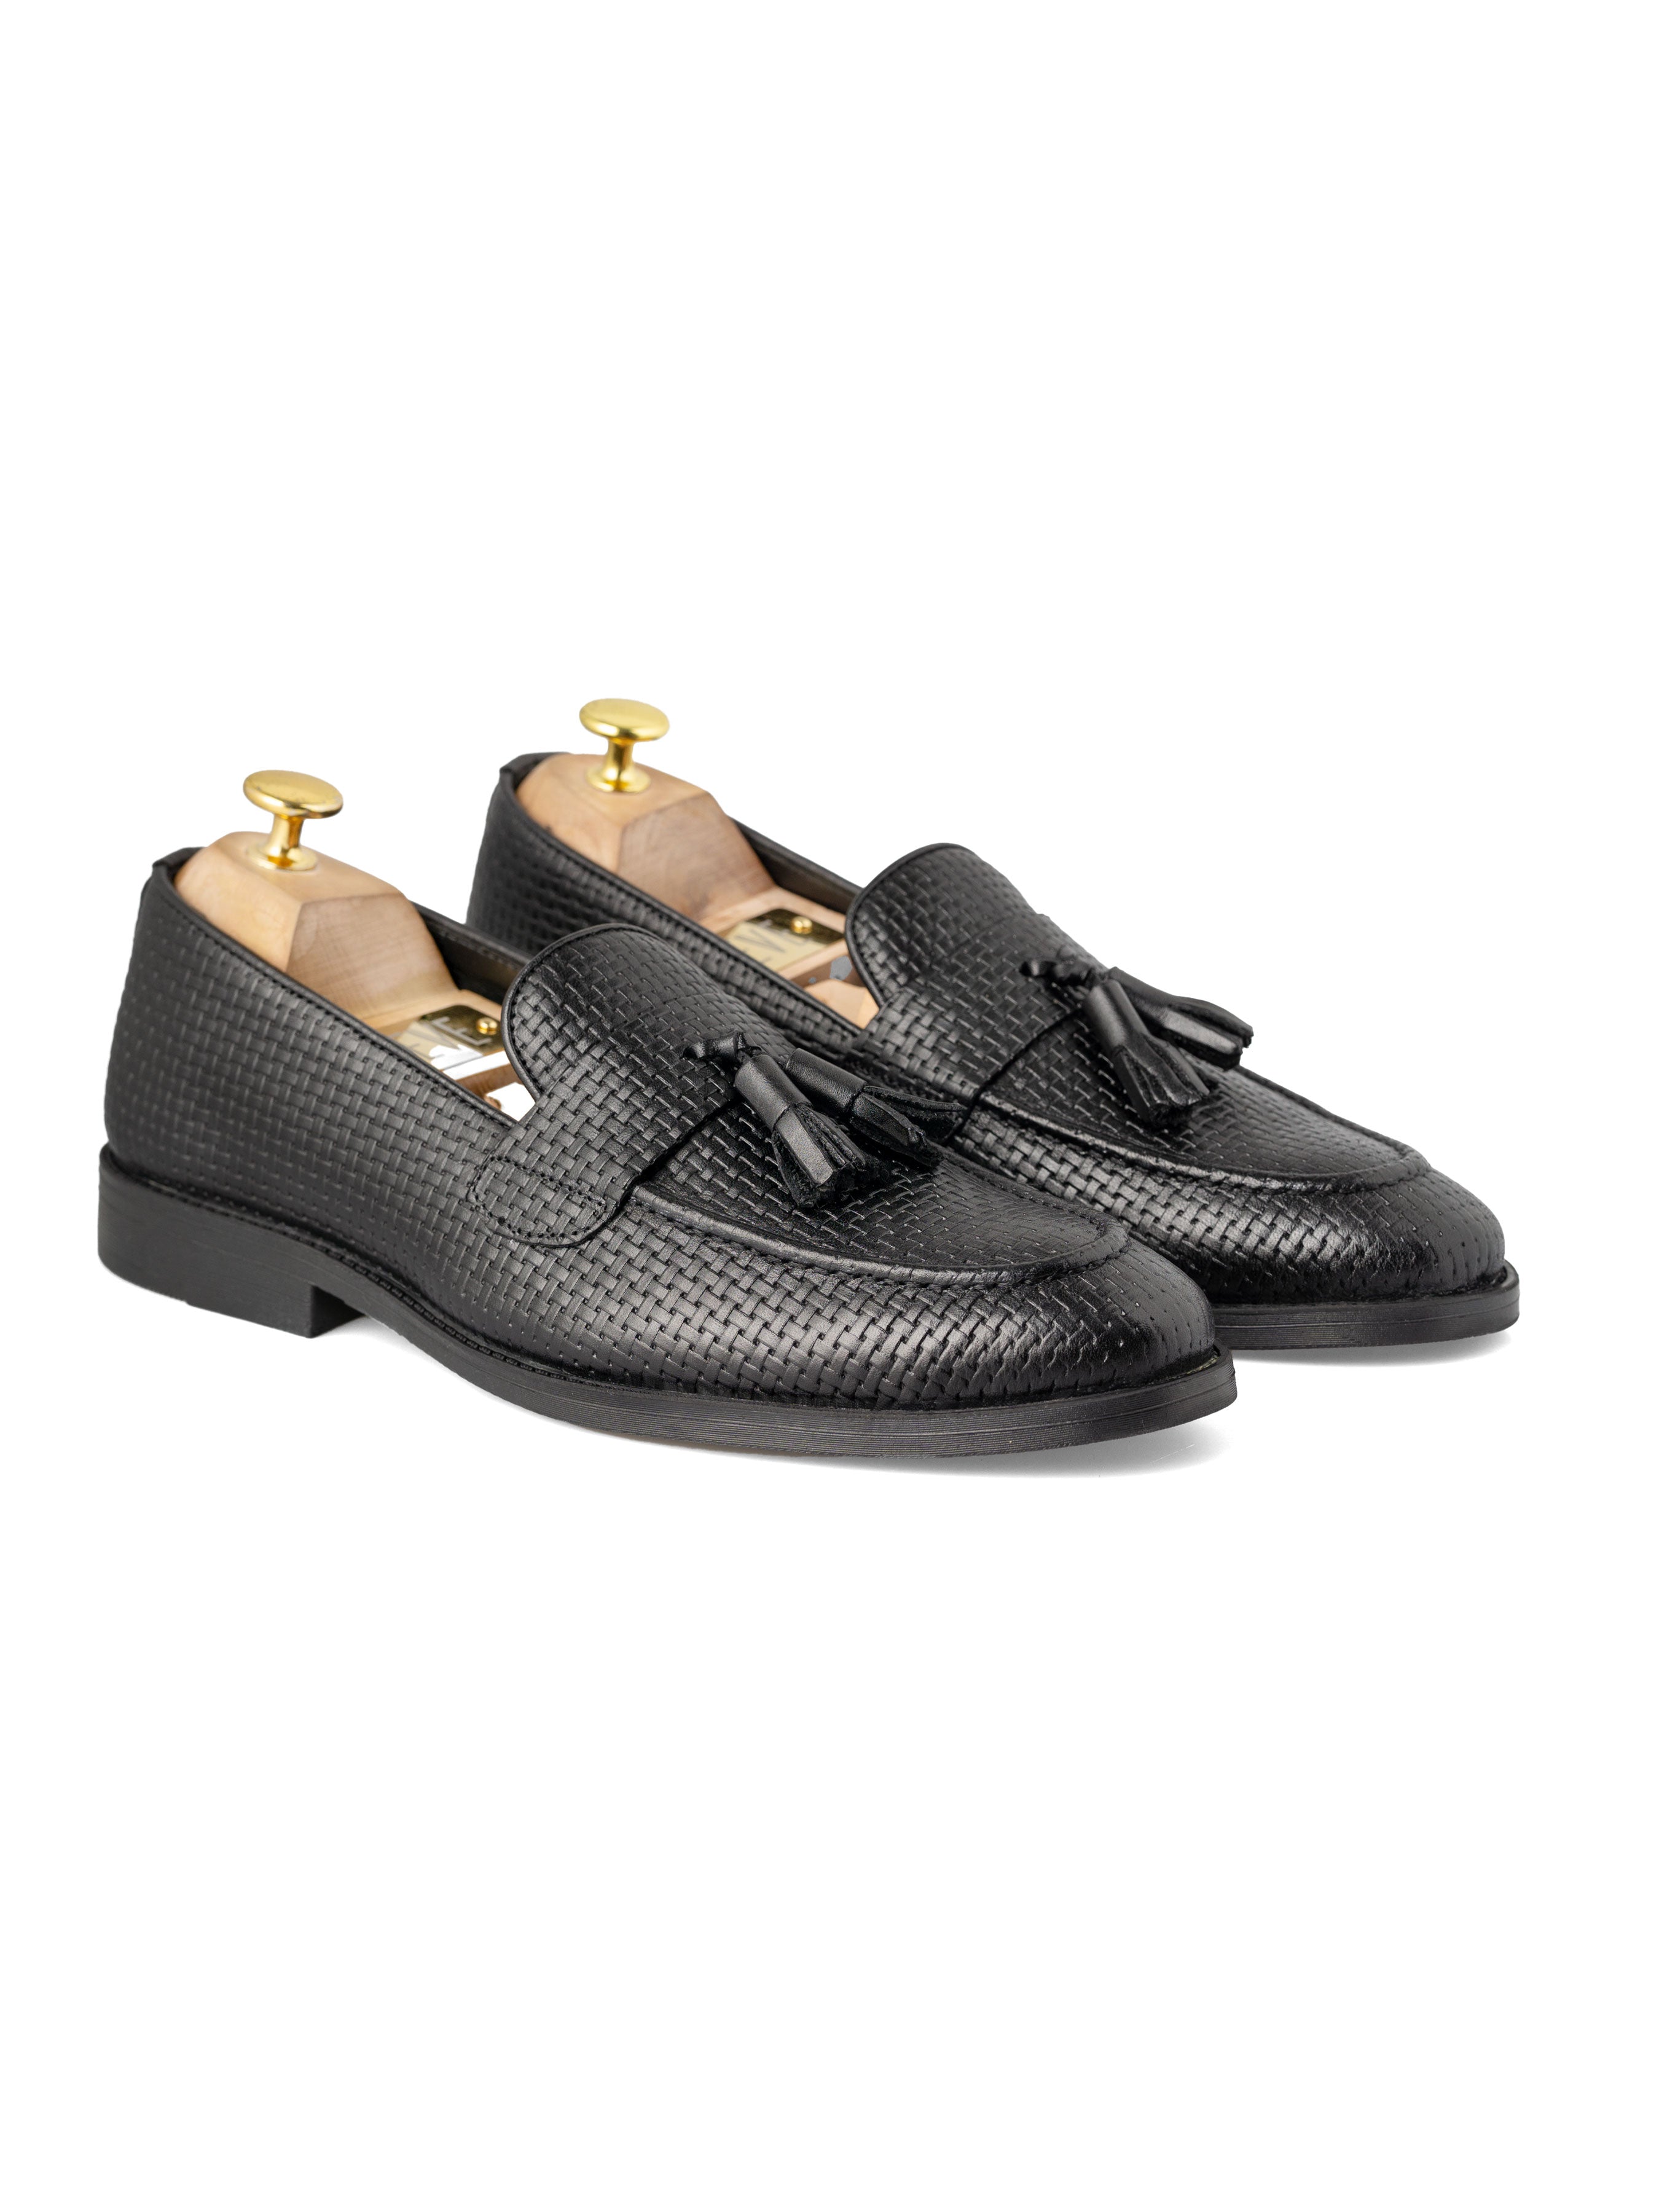 Rocky Tassel Loafer - Black Woven Leather (Flexi-Sole) - Zeve Shoes